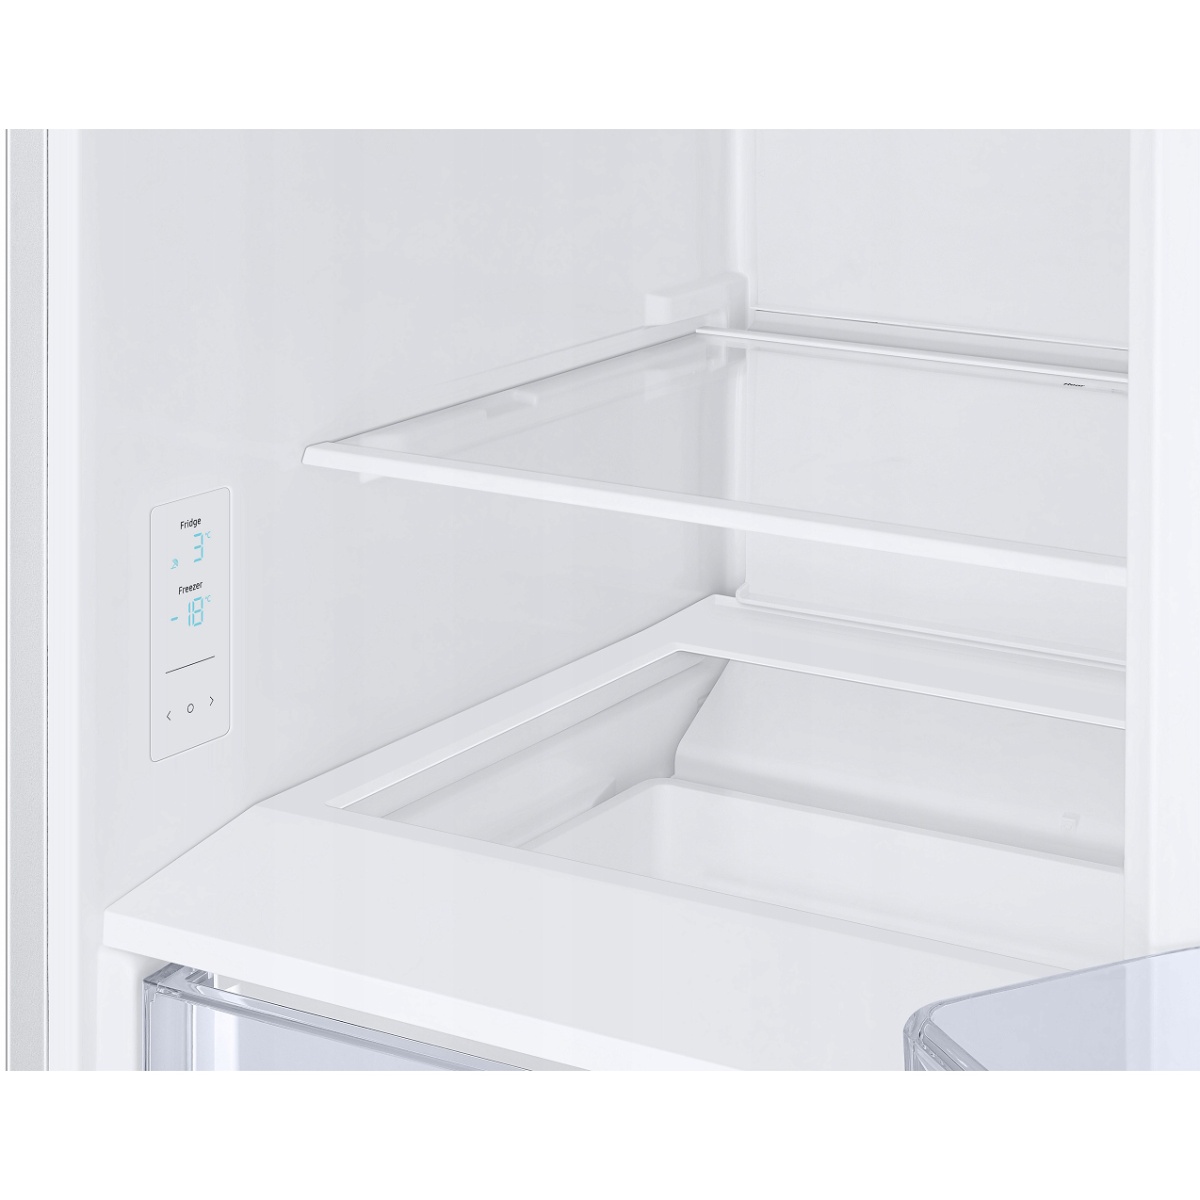 Холодильник Samsung RB34T600FWW (Объем - 344 л / Высота - 185,3 см / A+ / Белый / NoFrost / Space Max / All Around Cooling / Digital Inverter)